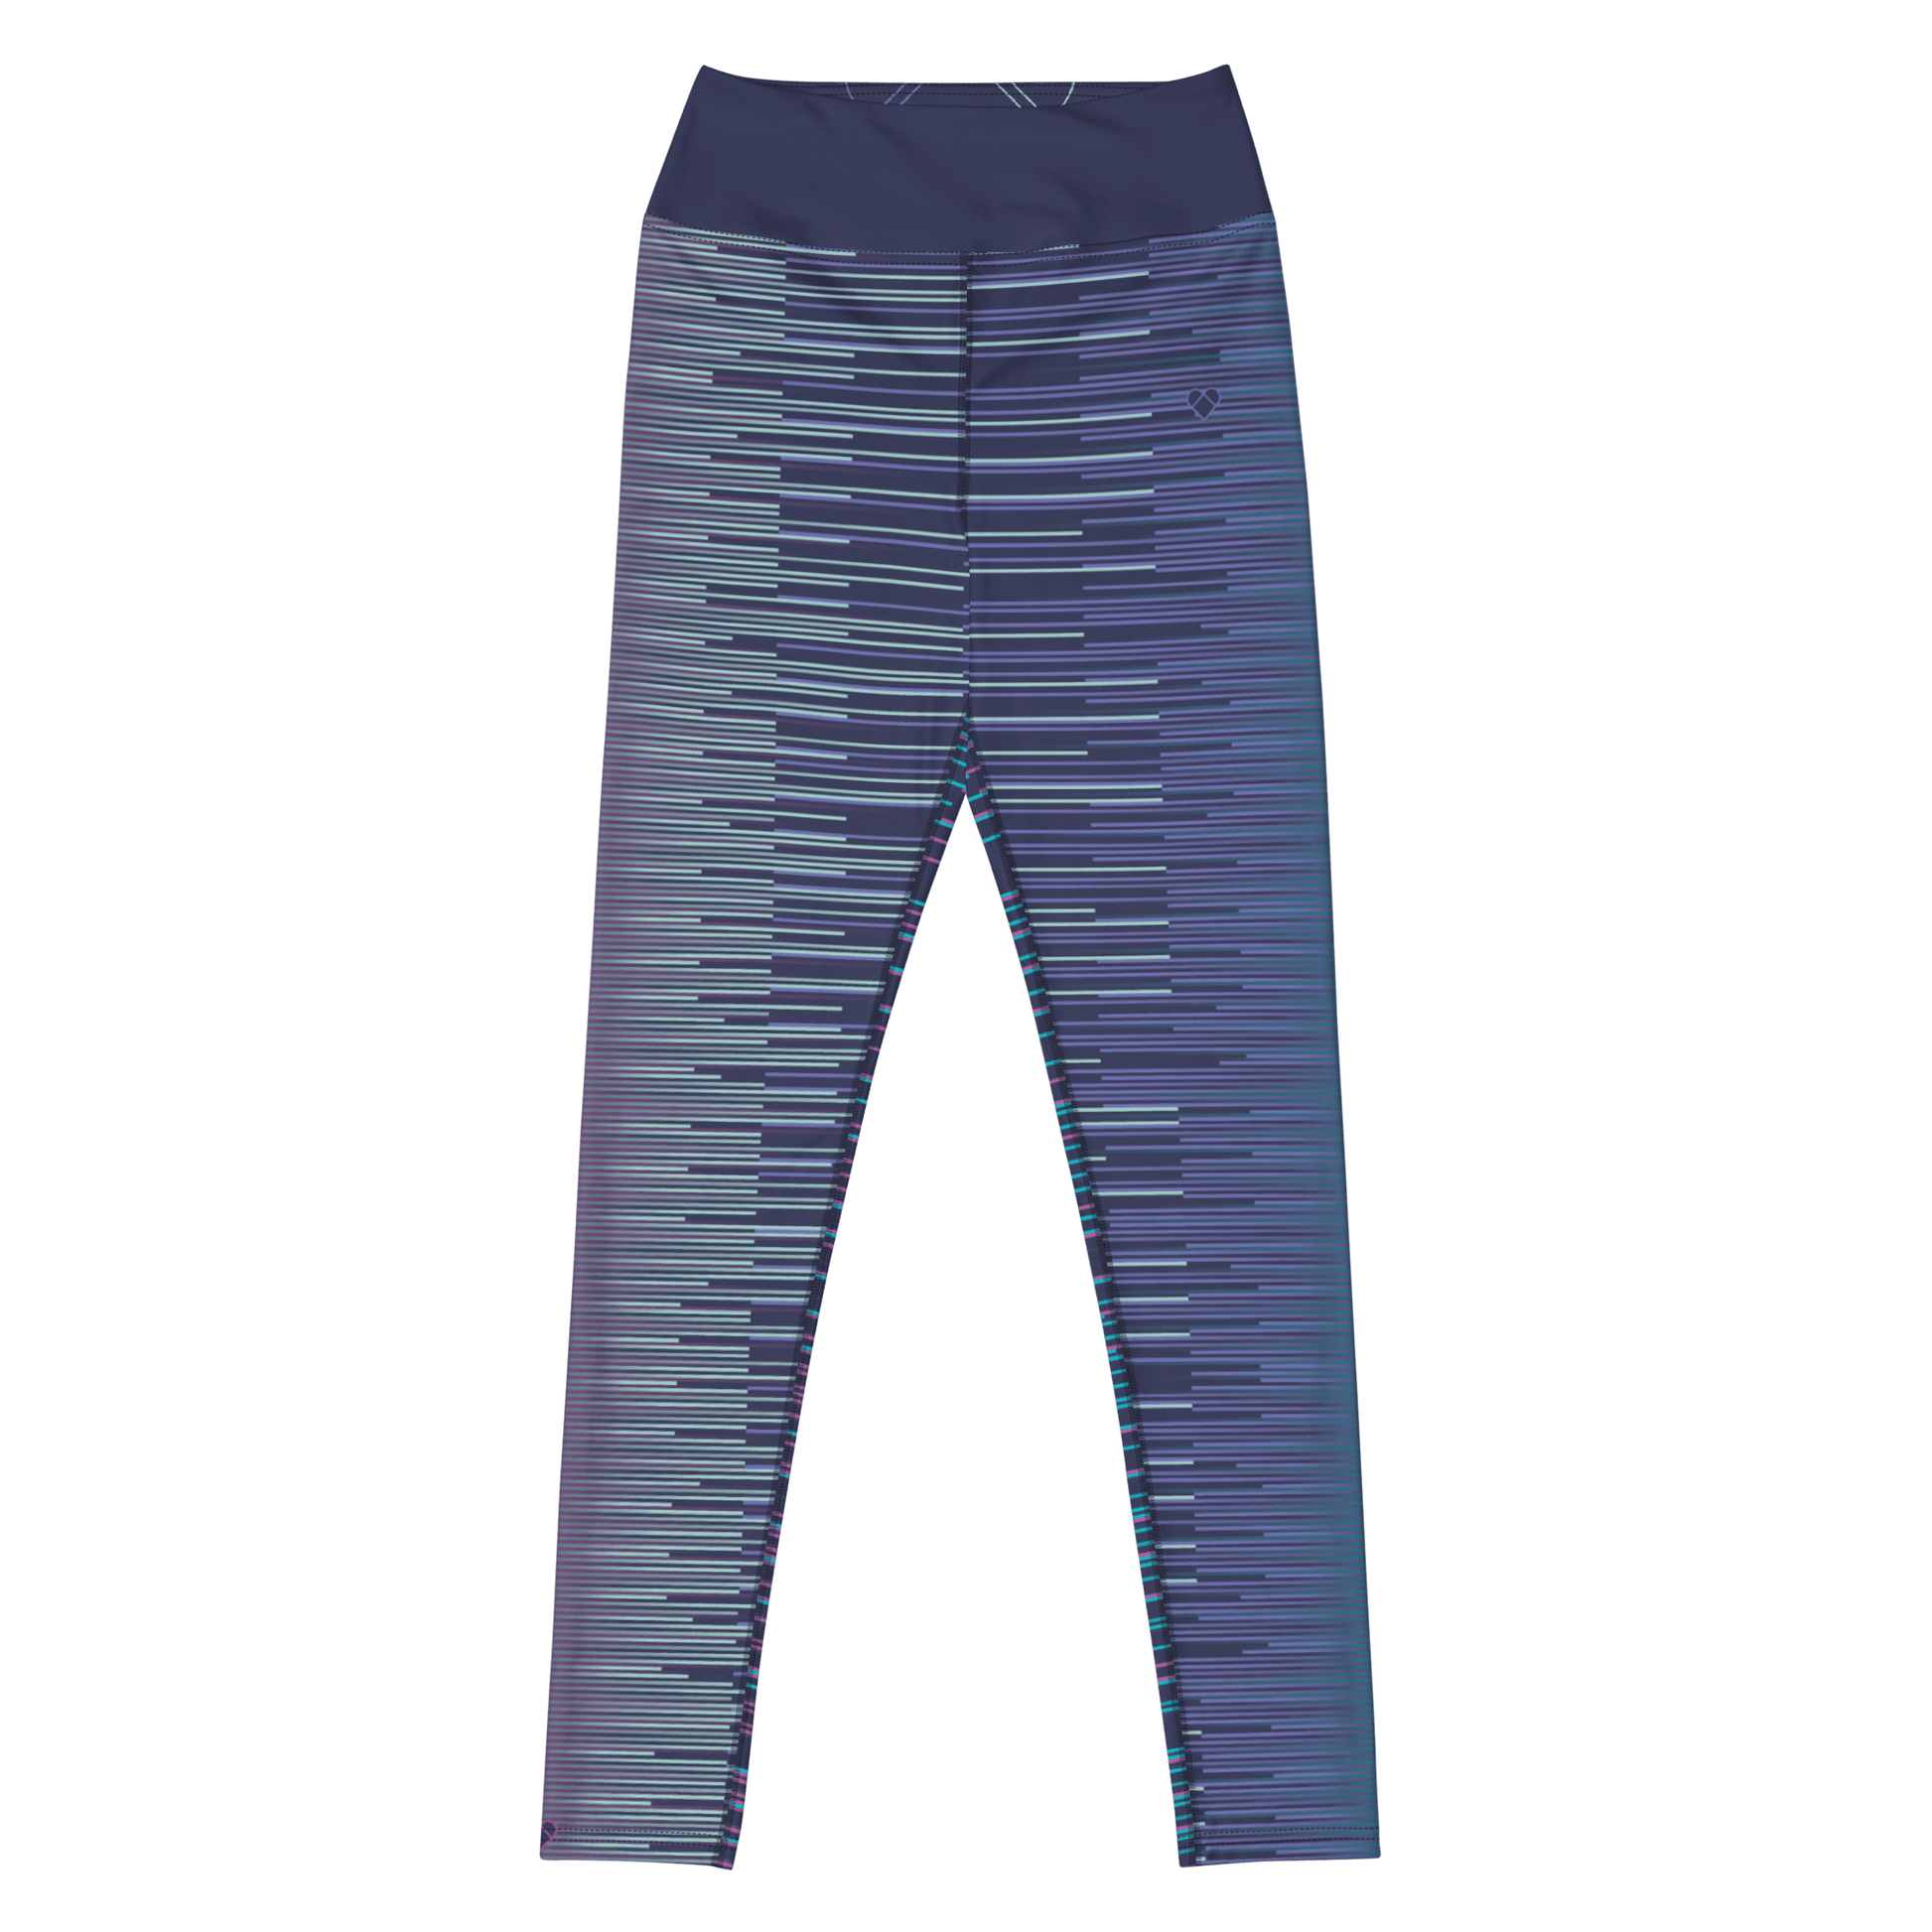 CRiZ AMOR Women's Yoga Leggings in Dark Slate Blue with playful stripes